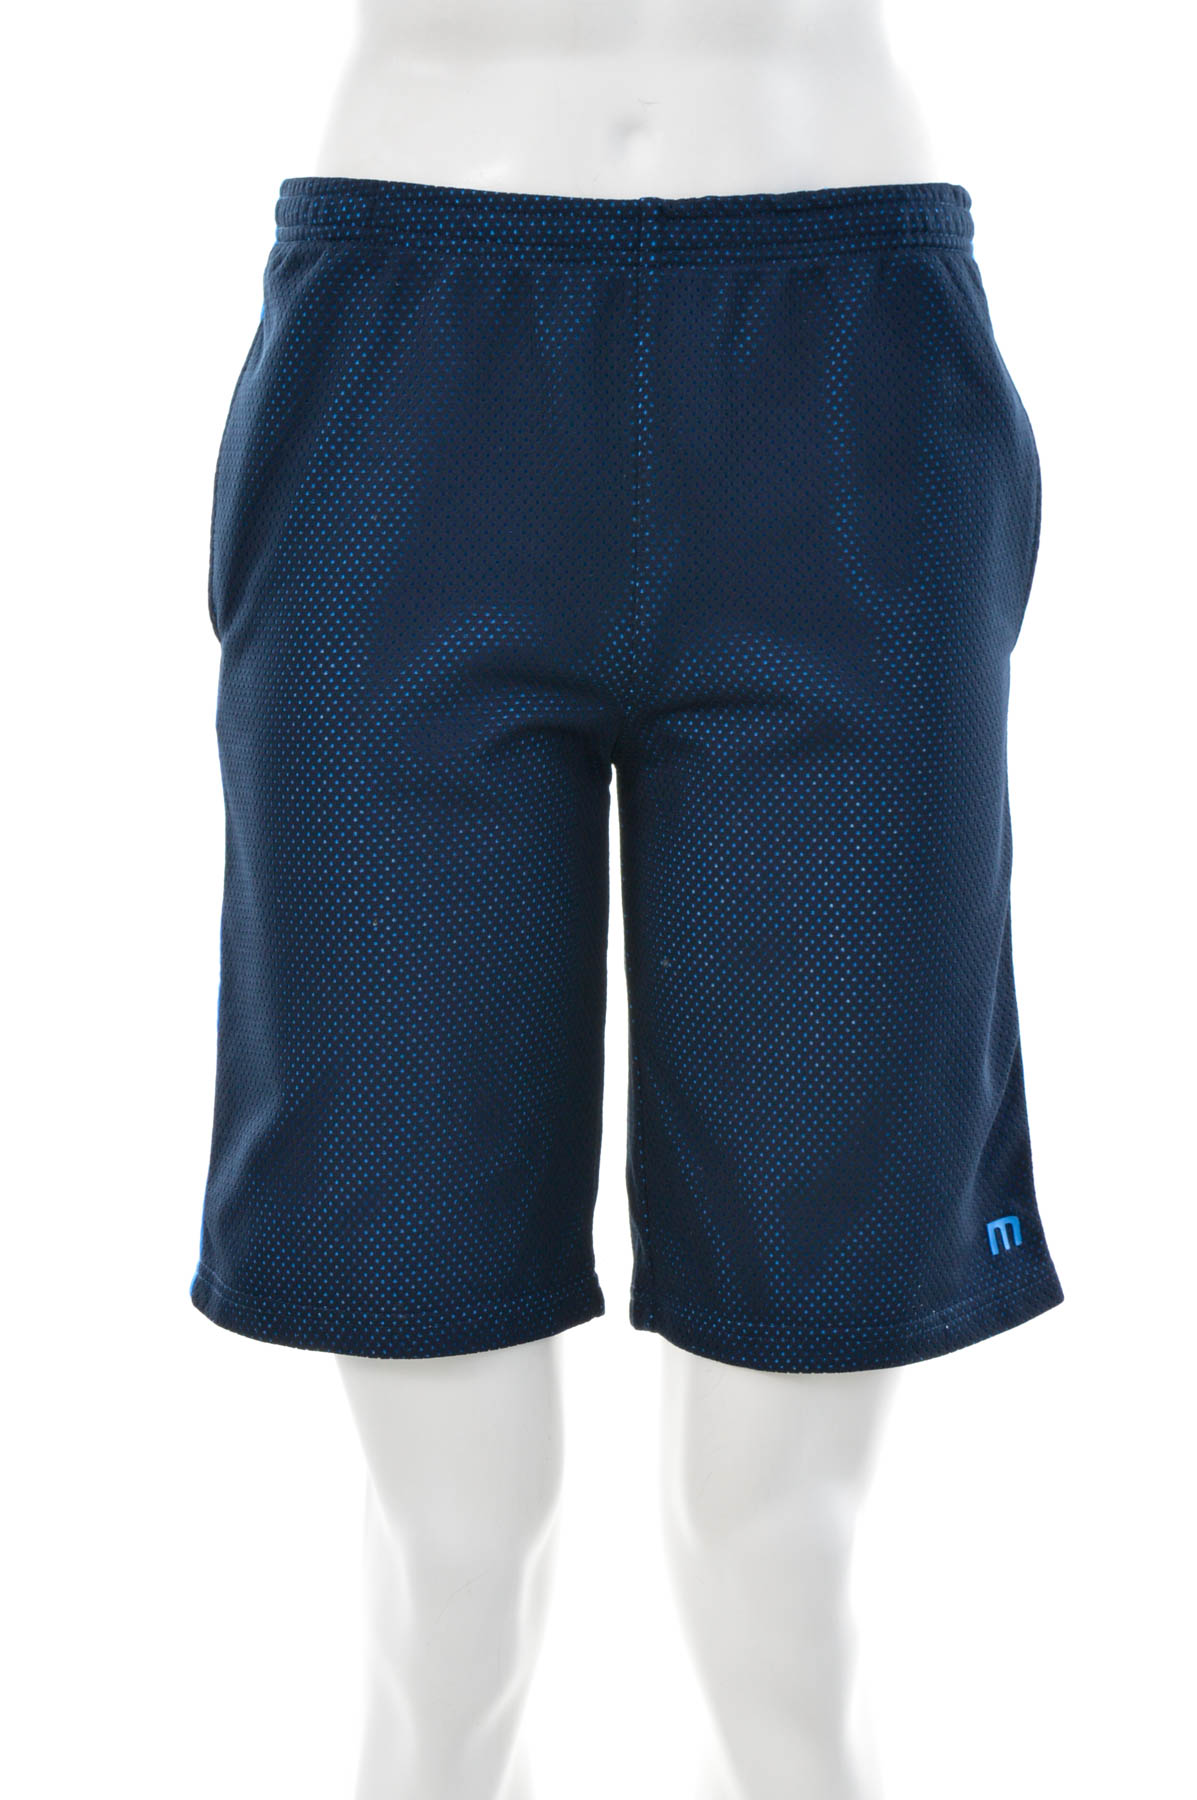 Men's shorts - Manguun Sports - 0